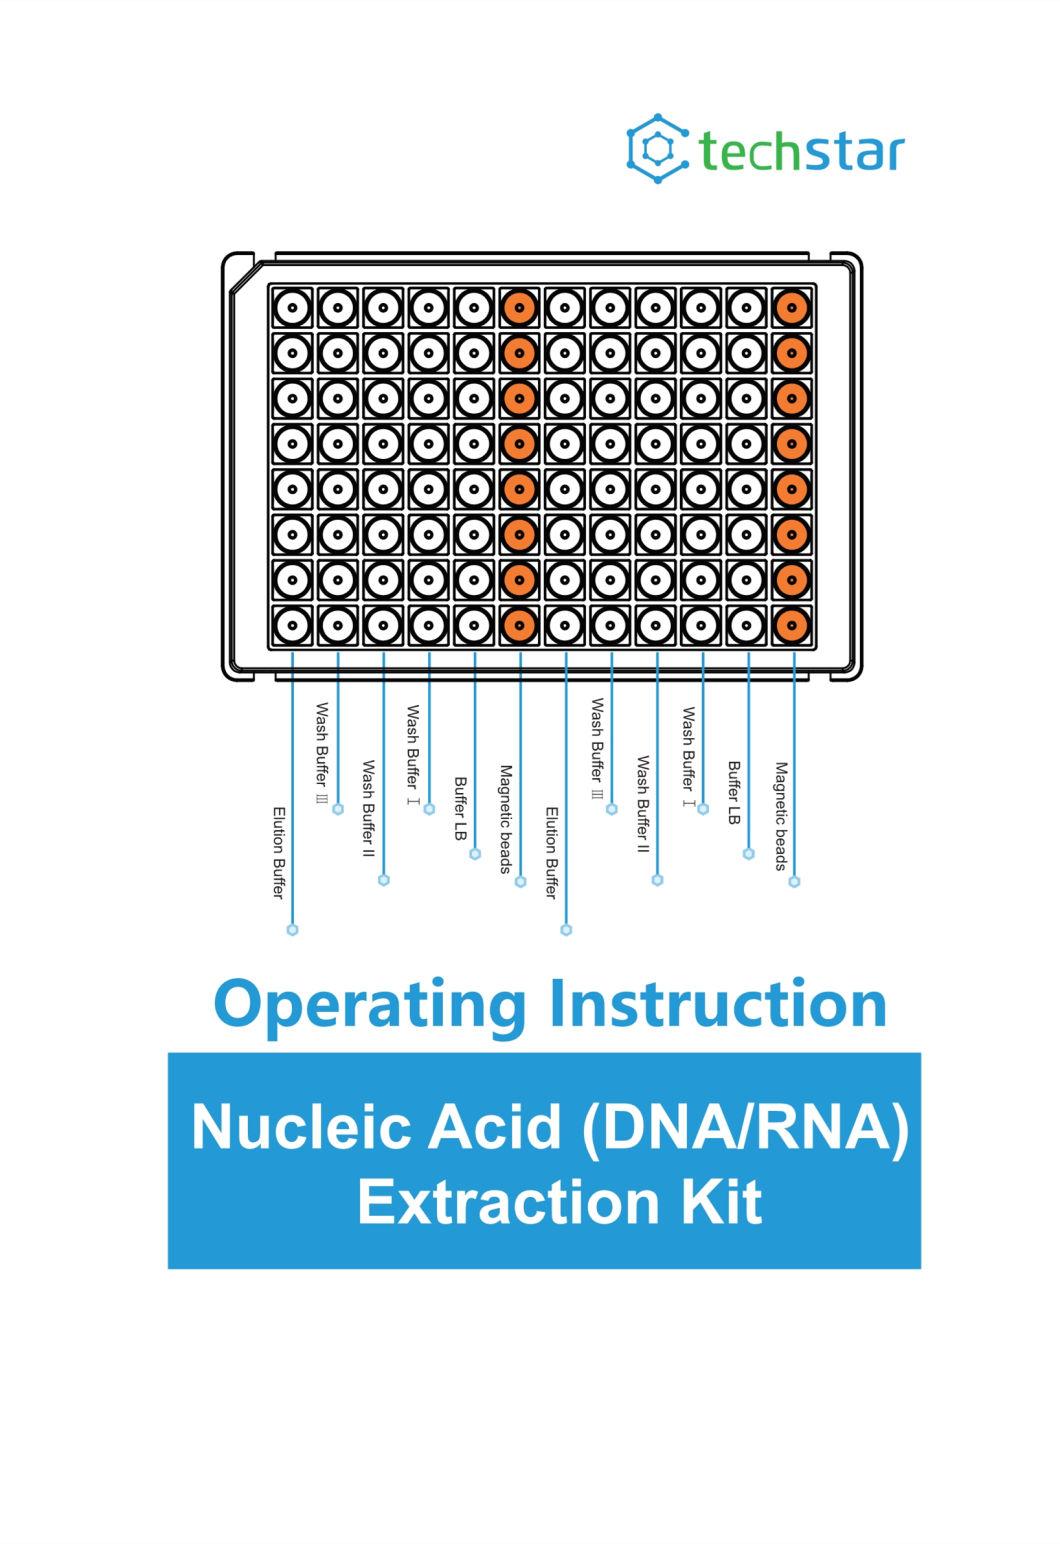 Techstar Nucleic Acid Extraction Test Kit